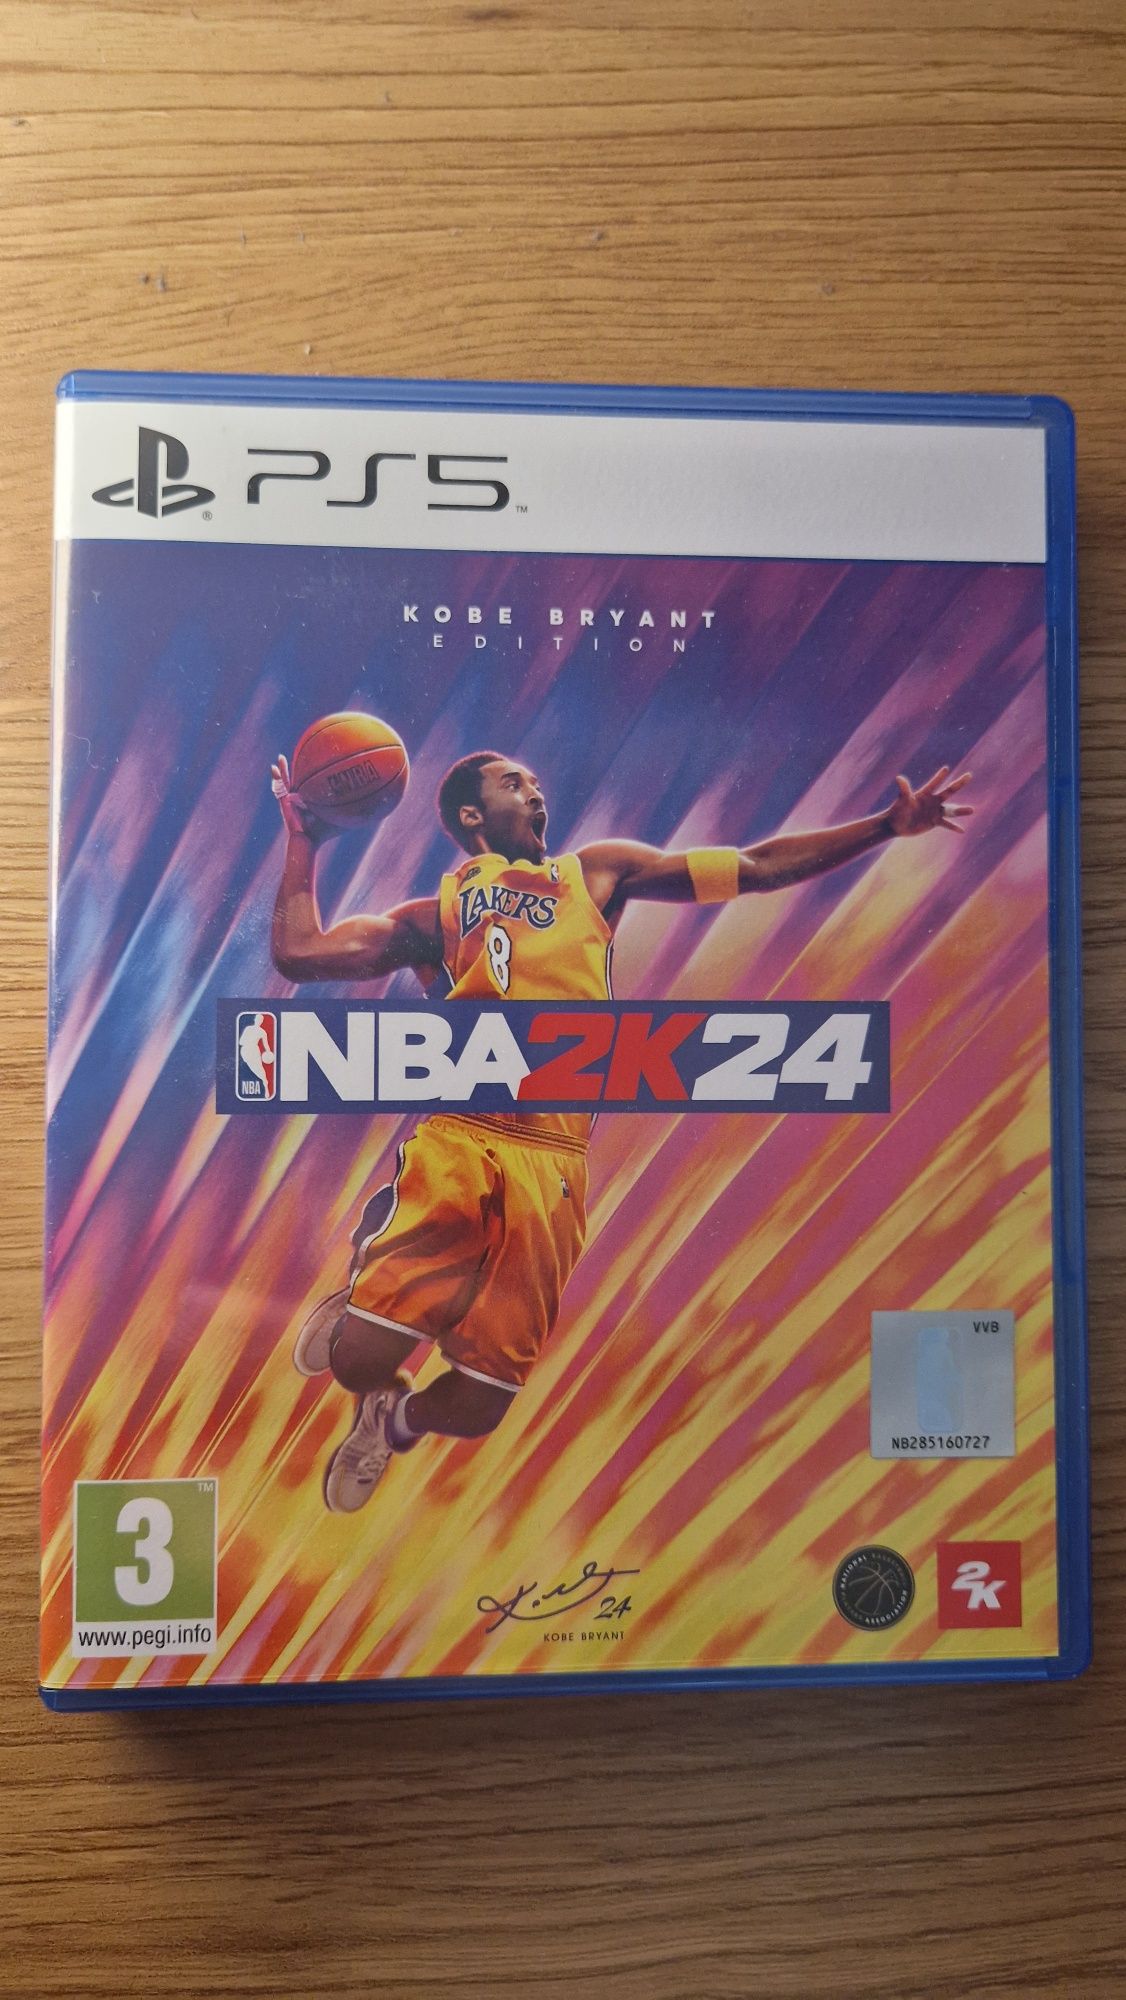 NBA 2k24 PS5 Kobe Bryant edition